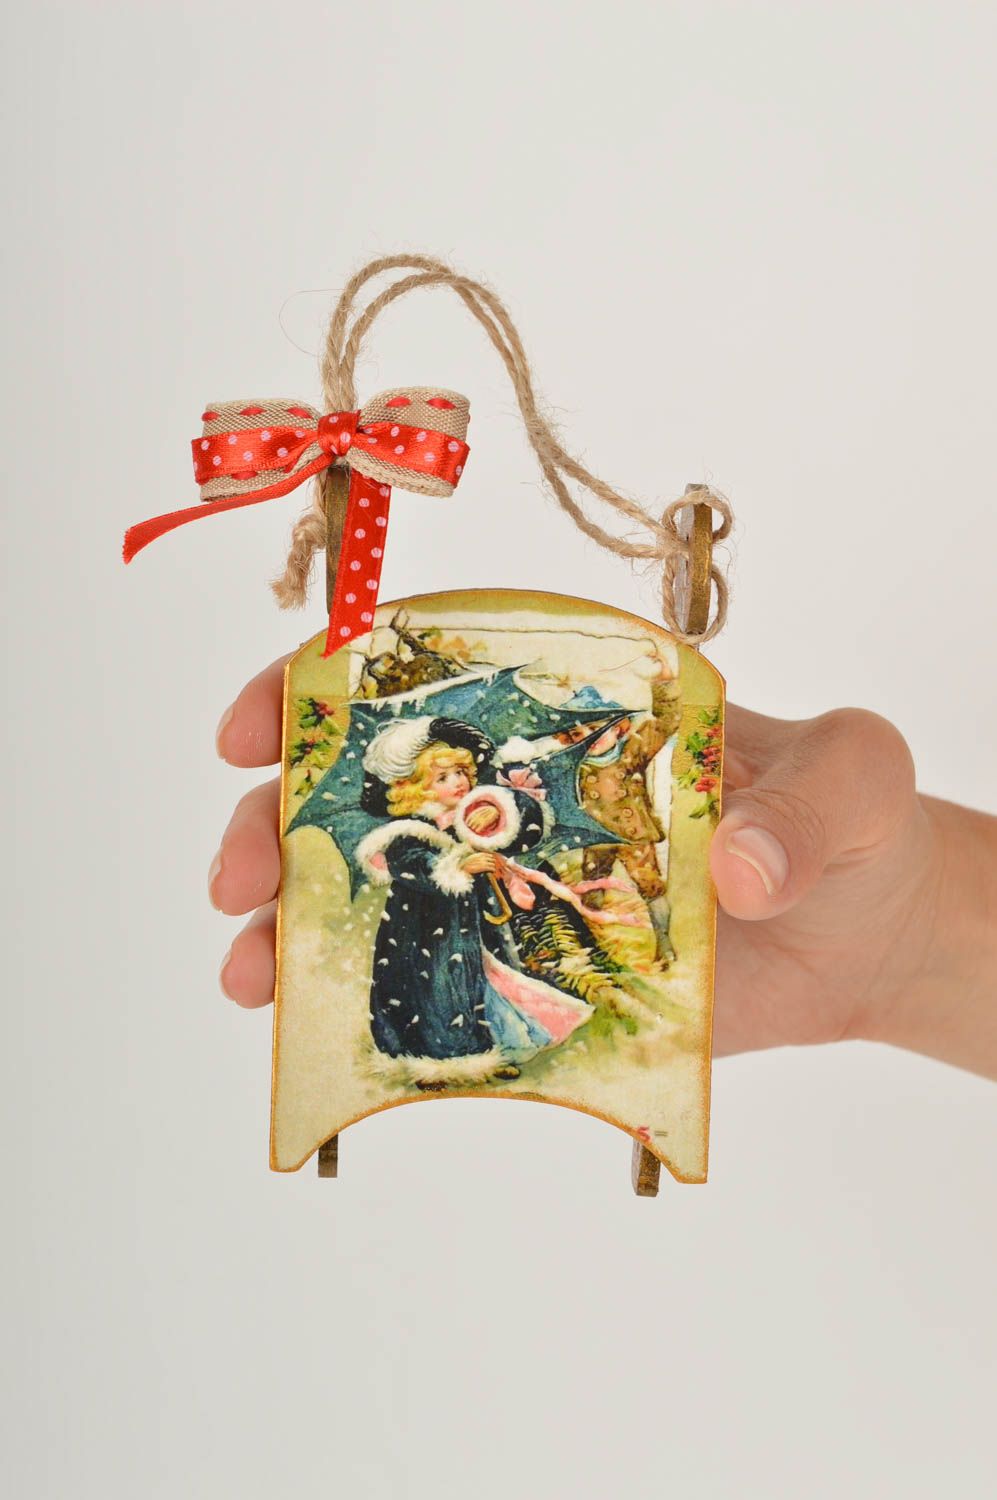 Adorno navideño casero hecho a mano elemento decorativo souvenir original foto 5